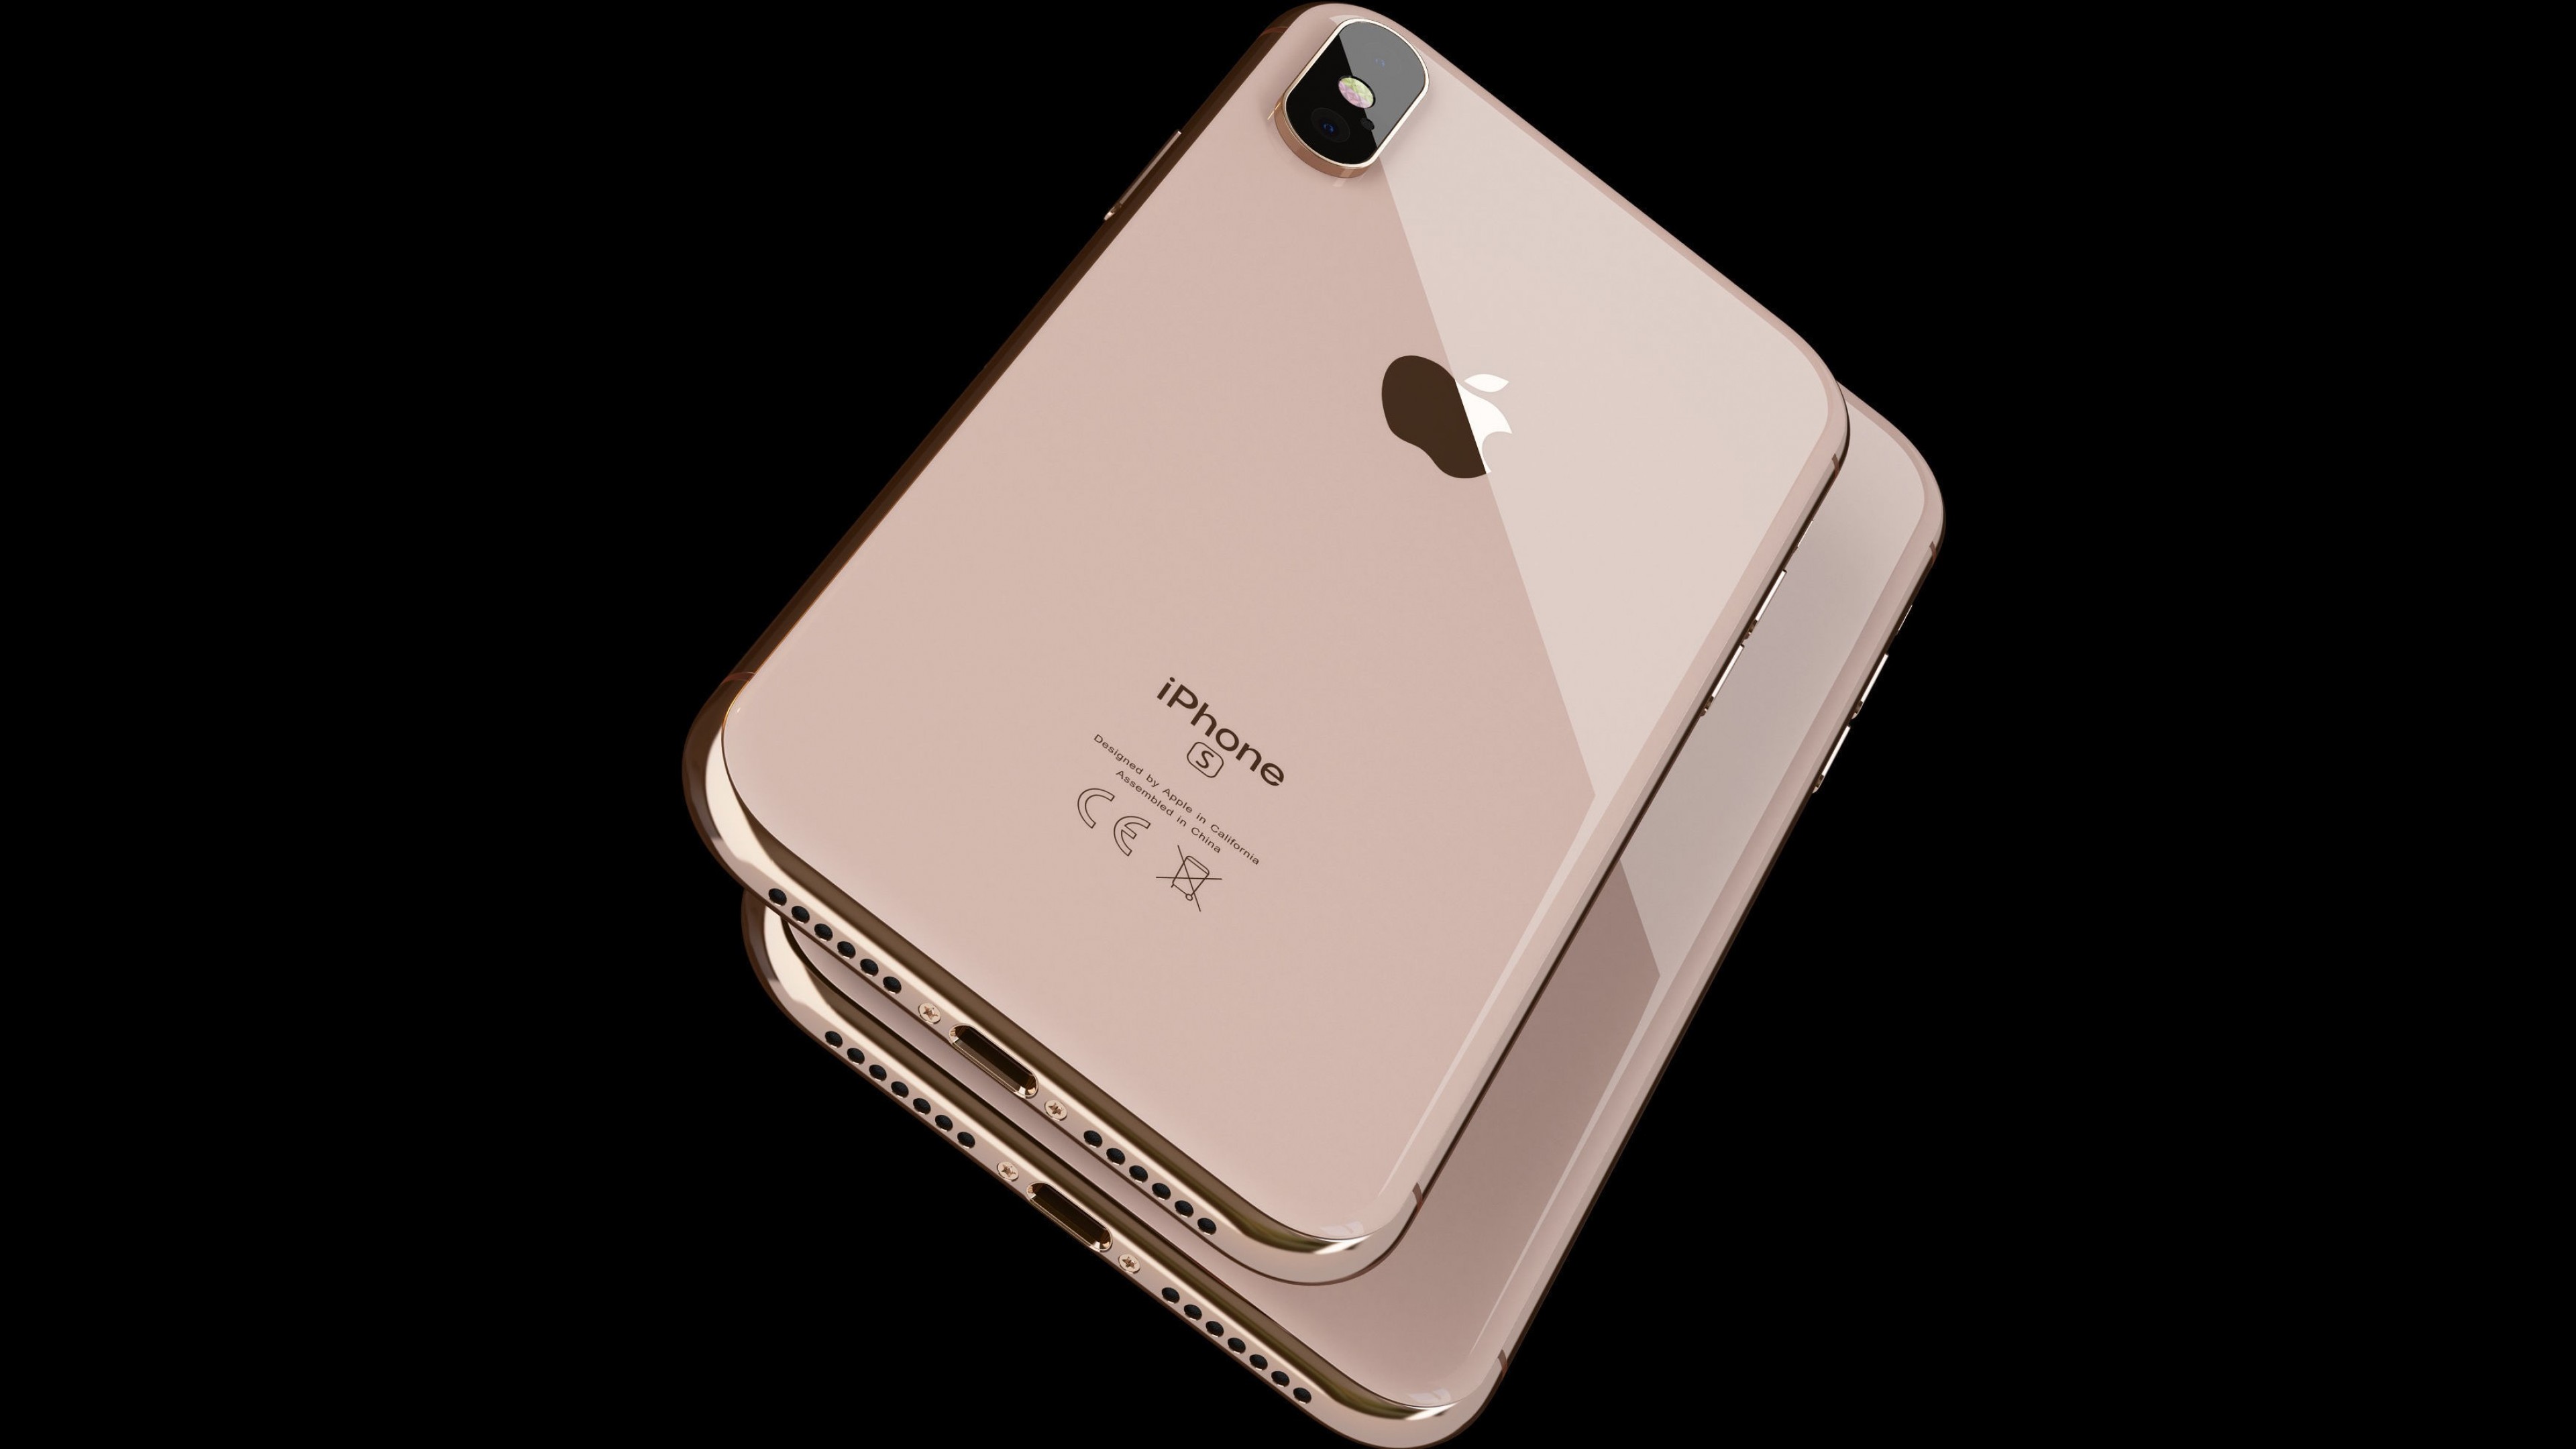 Wallpaper iPhone XS, iPhone XS Max, gold, smartphone, 4K, Hi-Tech #20327